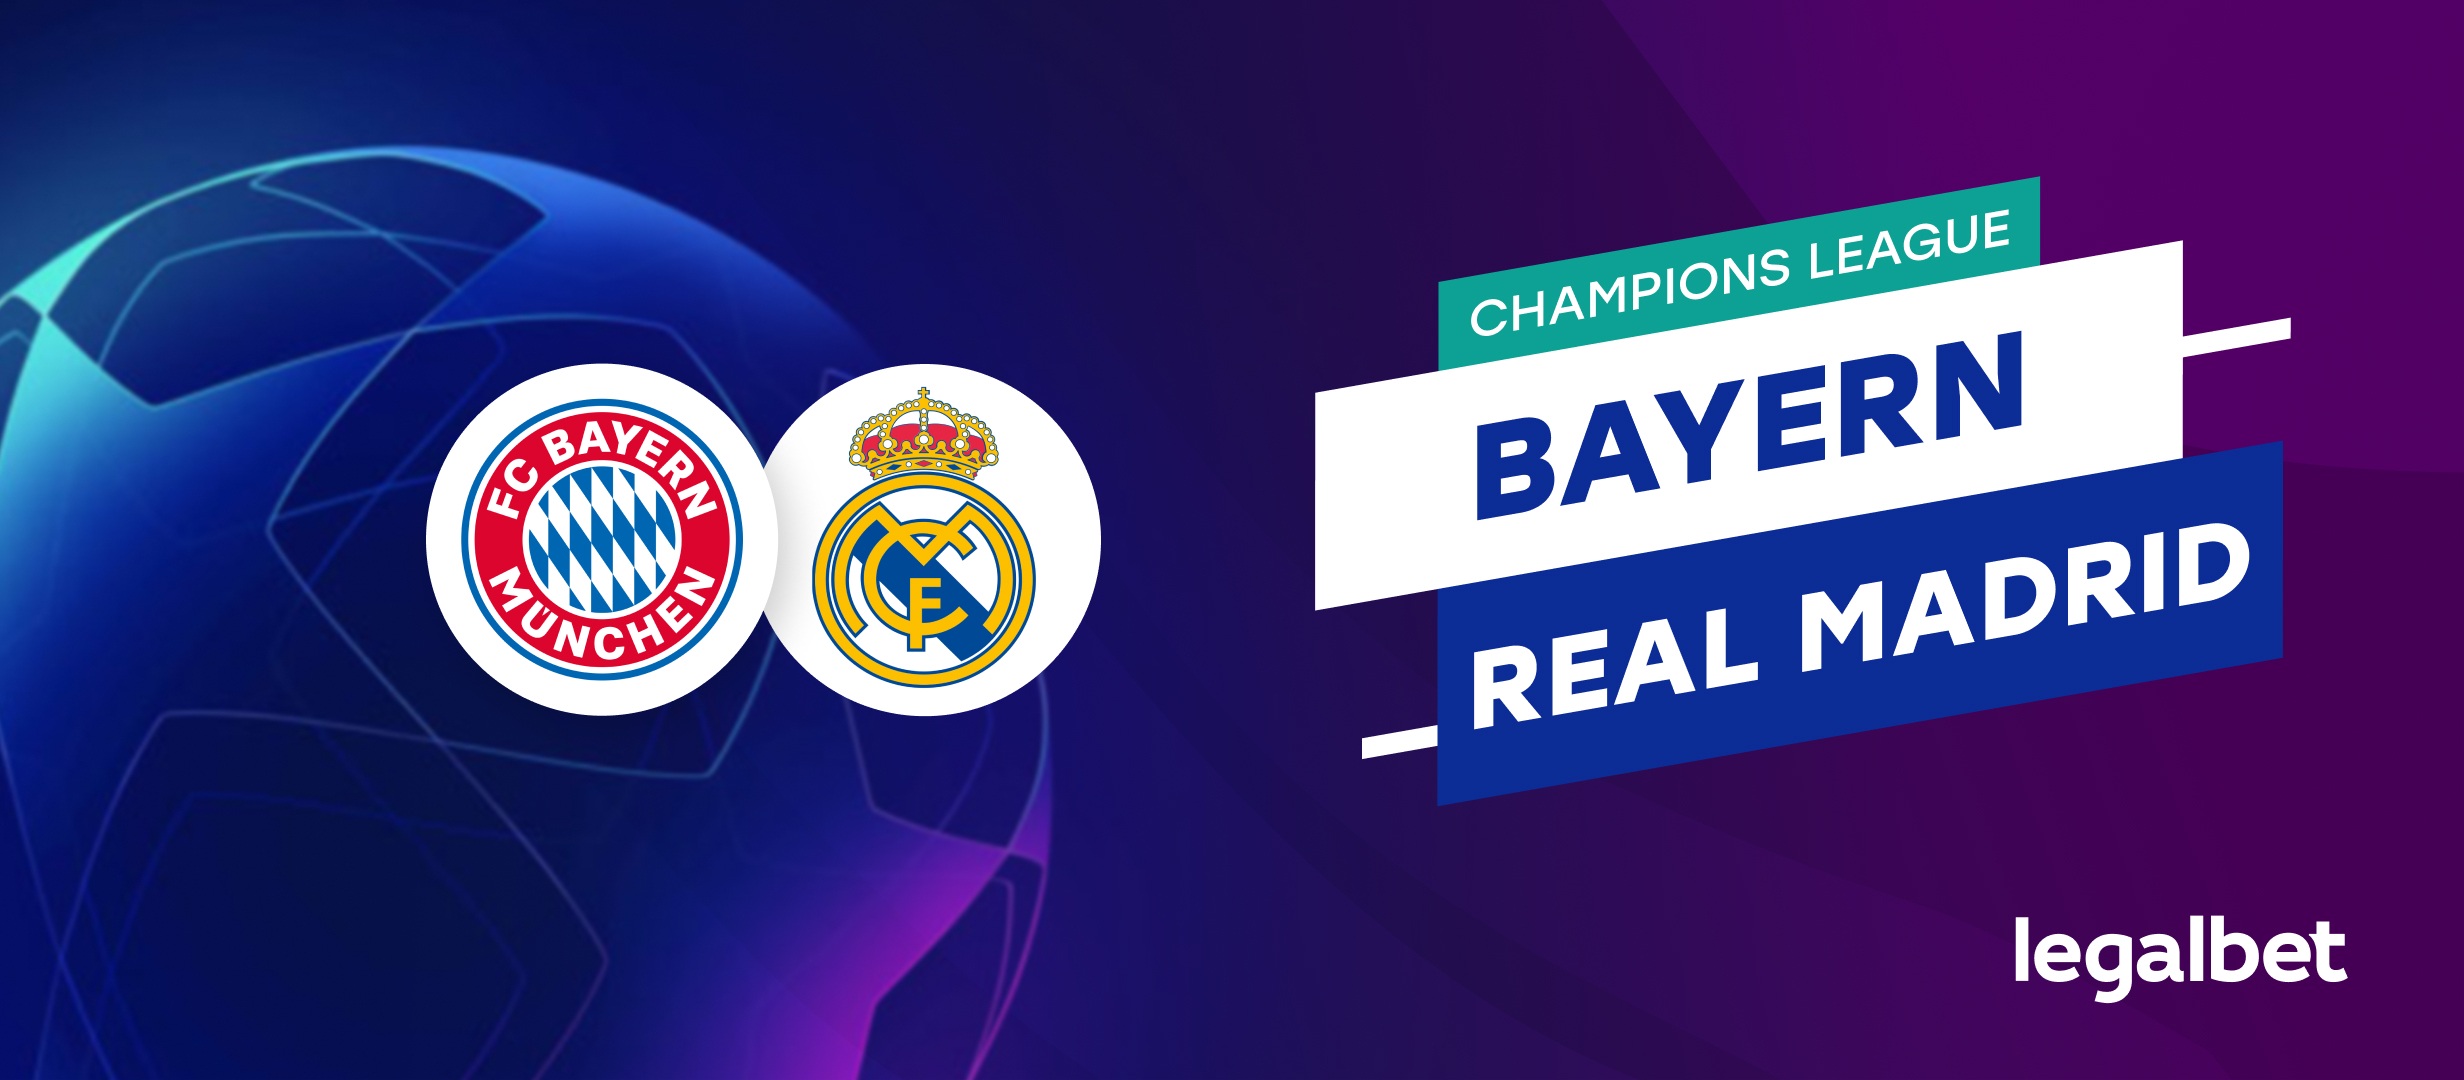 Bayern München - Real Madrid: Ponturi și cote la pariuri